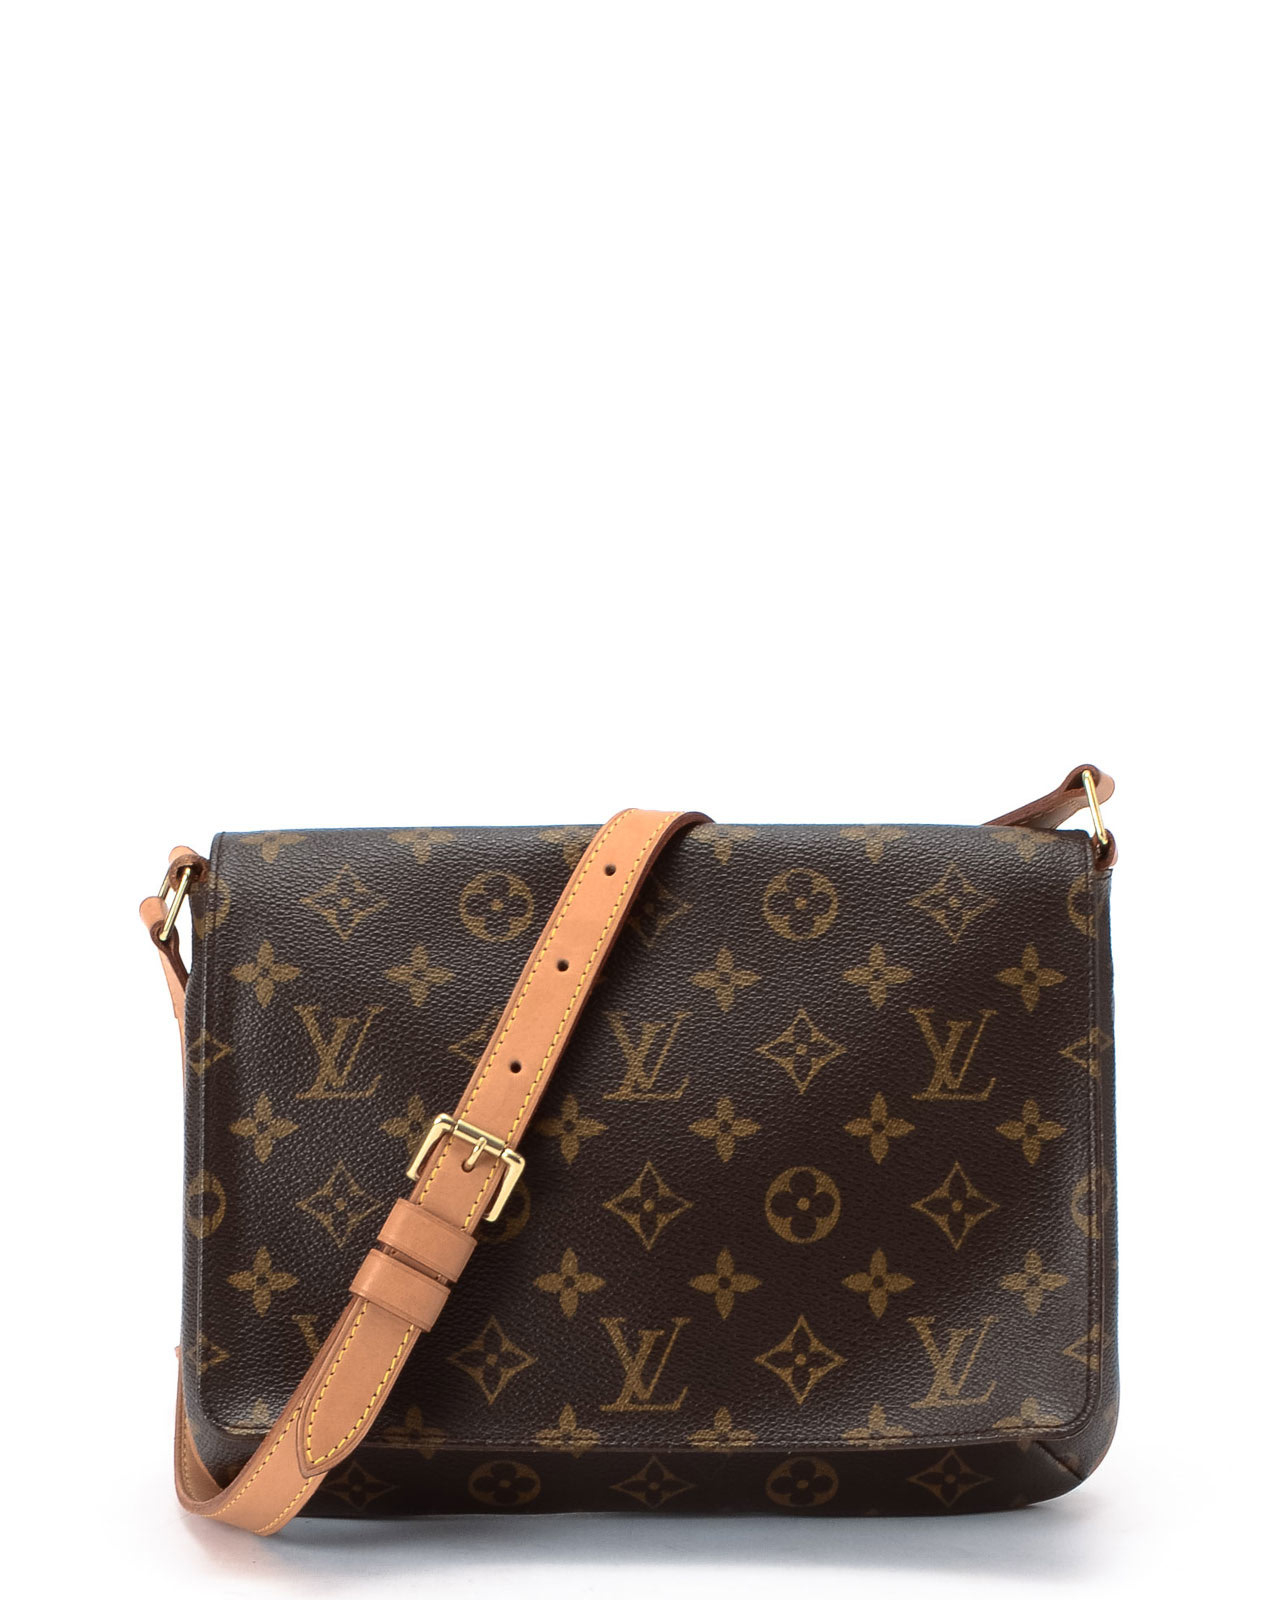 Lyst - Louis Vuitton Musette Tango Long Strap Shoulder Bag in Brown